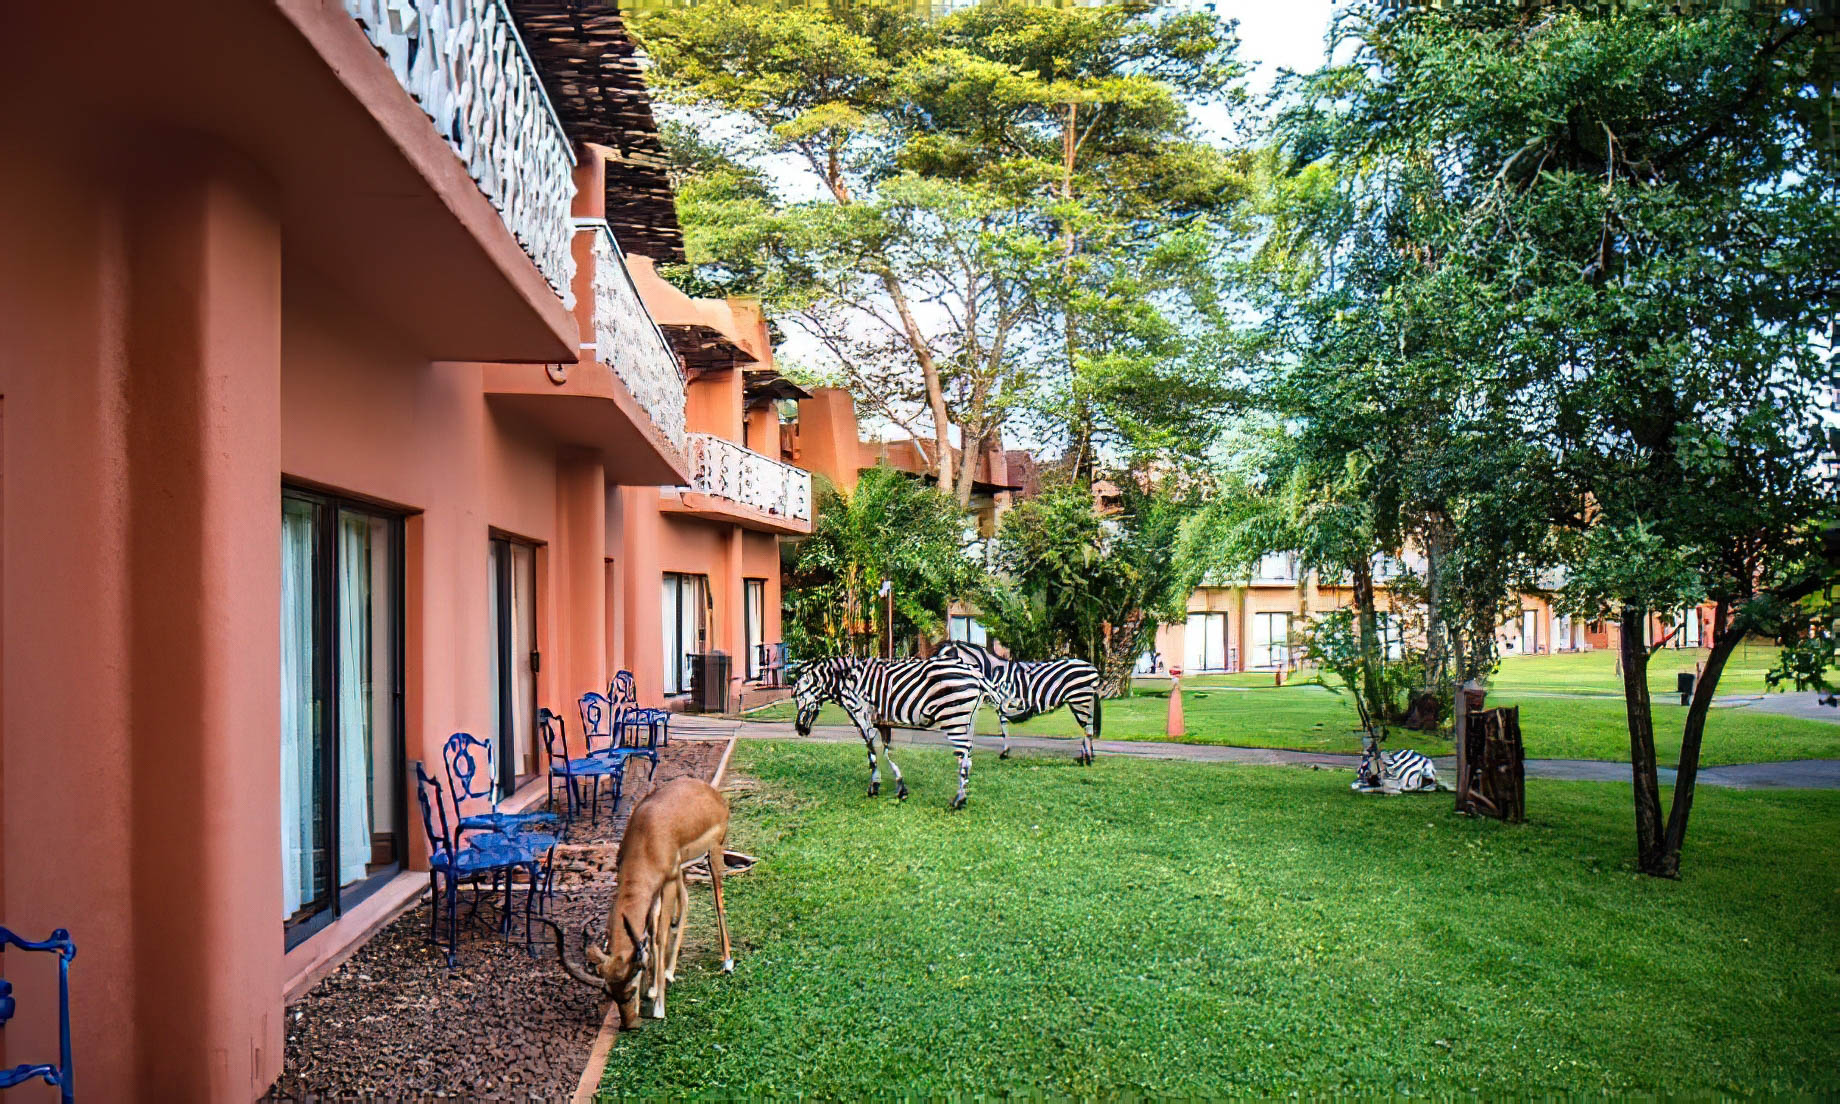 Avani Victoria Falls Resort – Livingstone, Zambia – Zebra